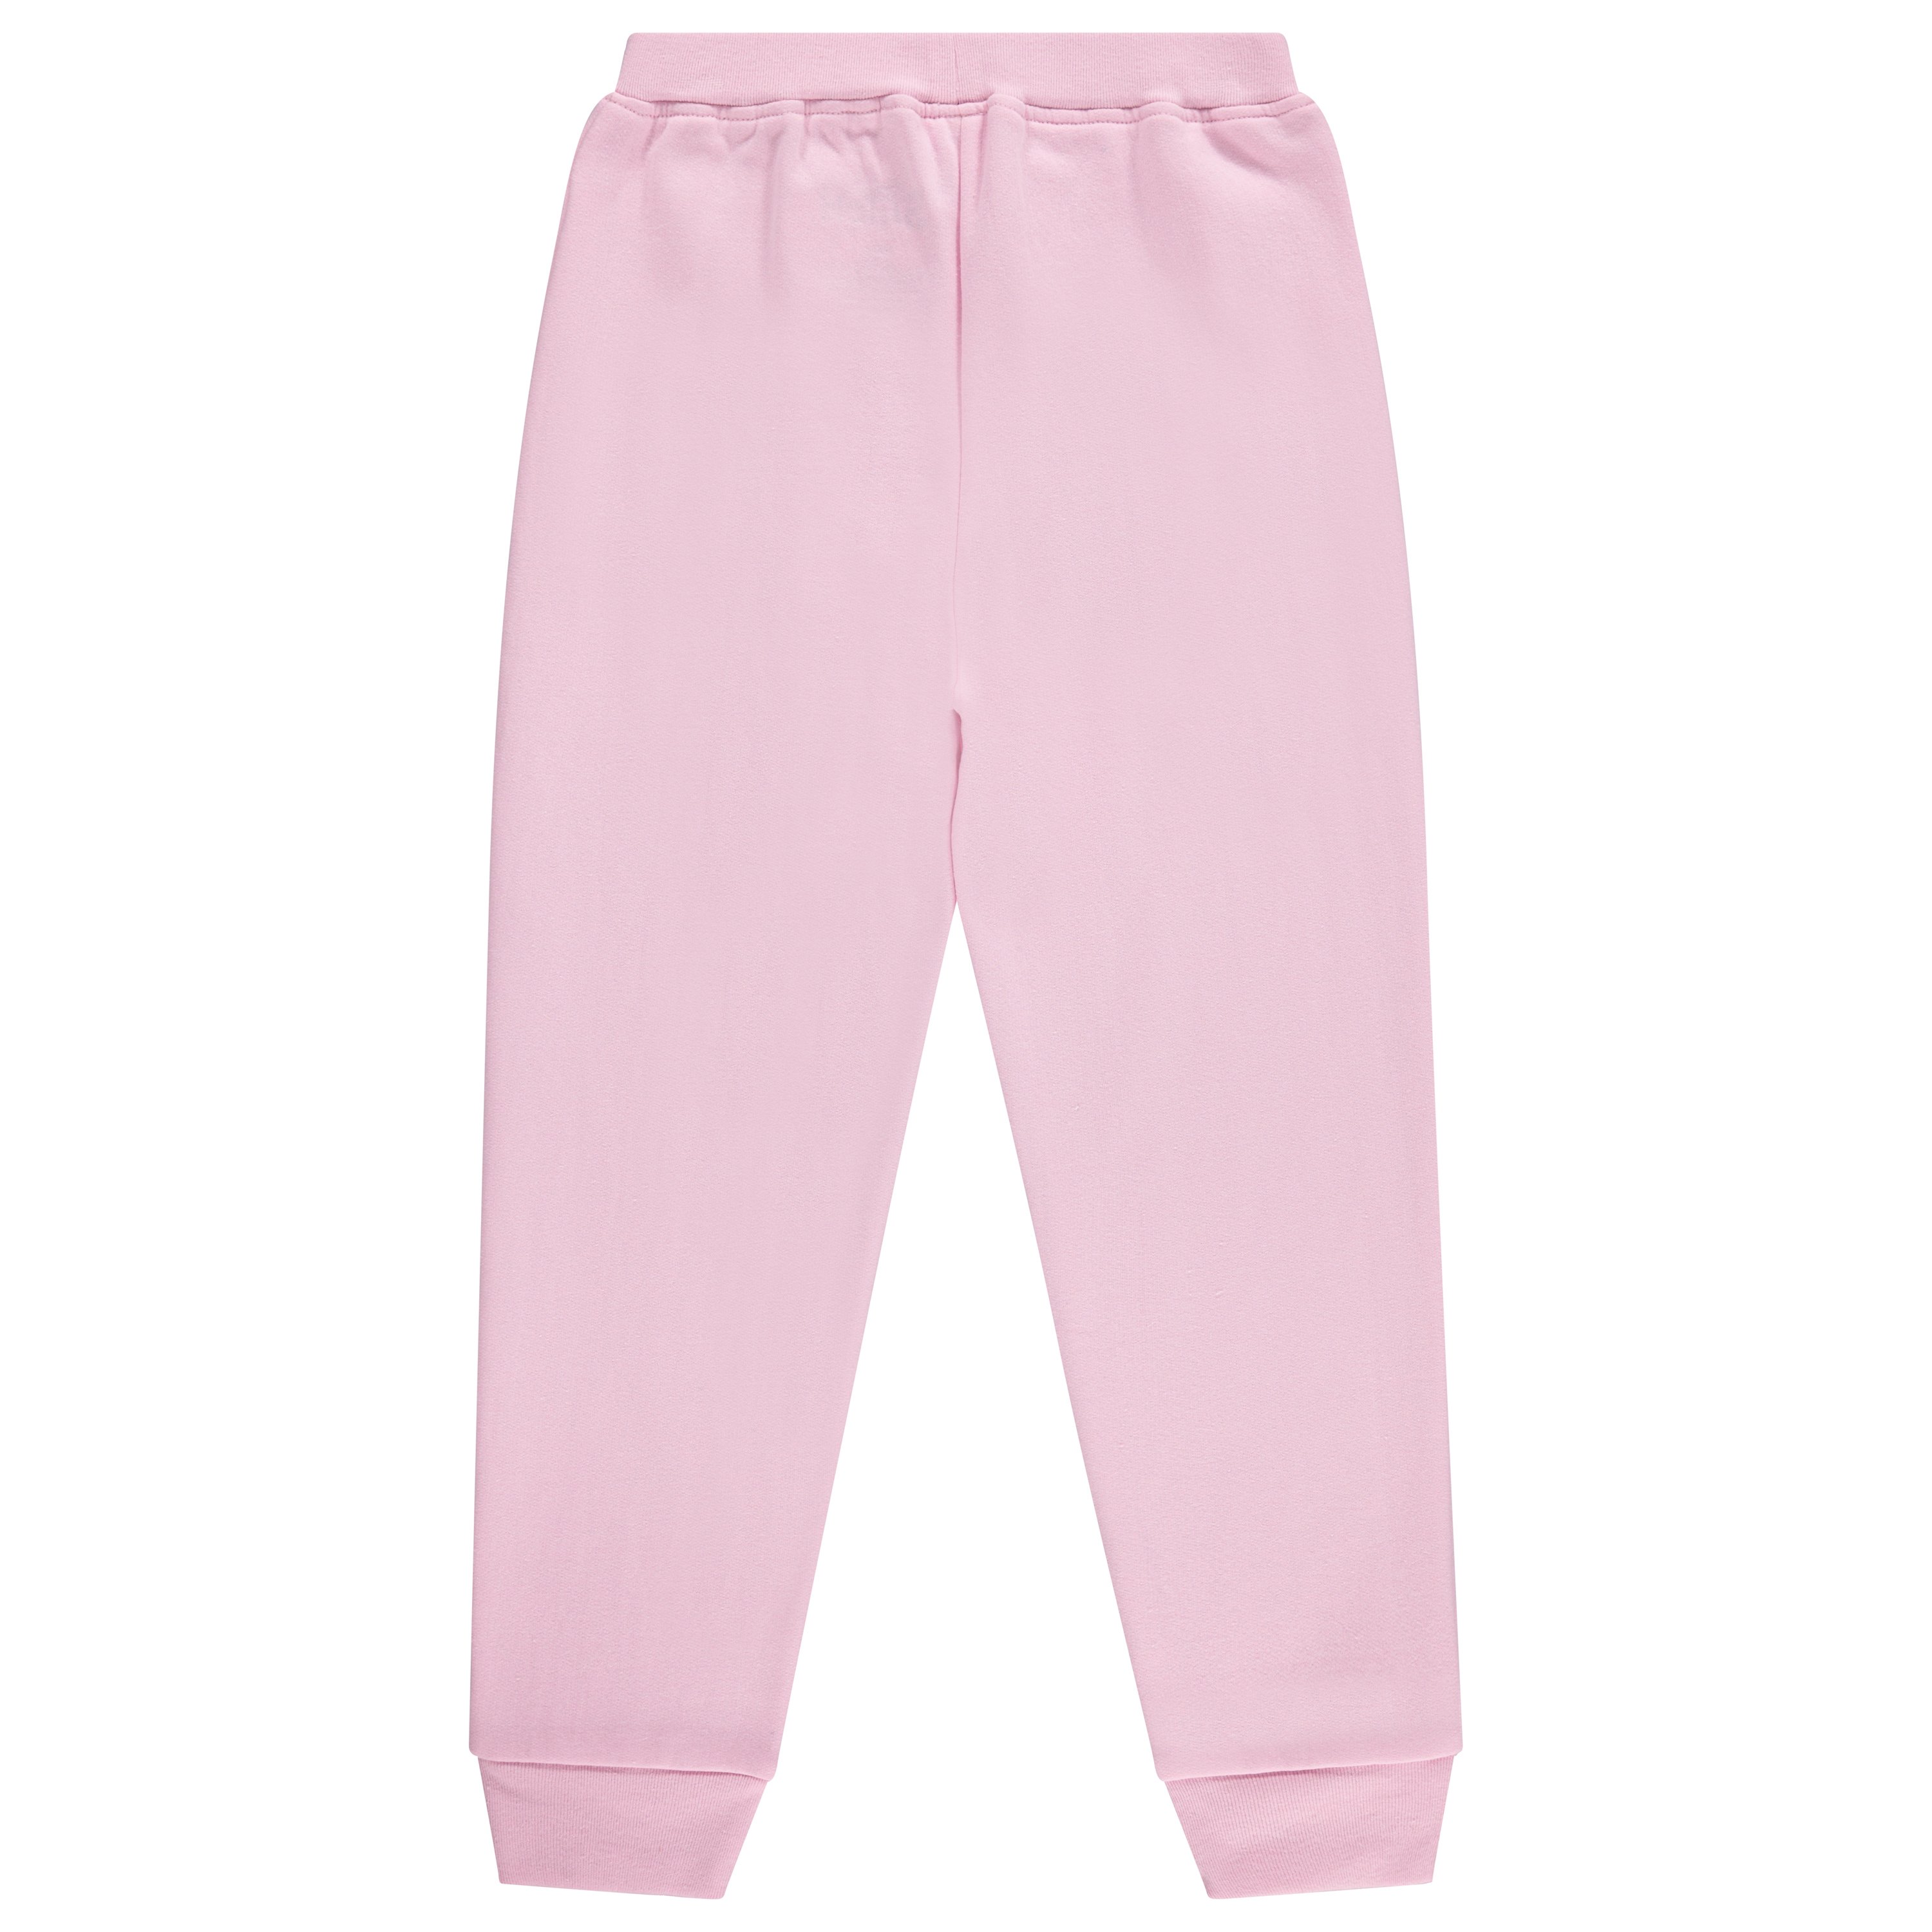 Disney Lilo & Stitch Jogger Sweatpants-Girls 4-16, Light Pink, 4-5